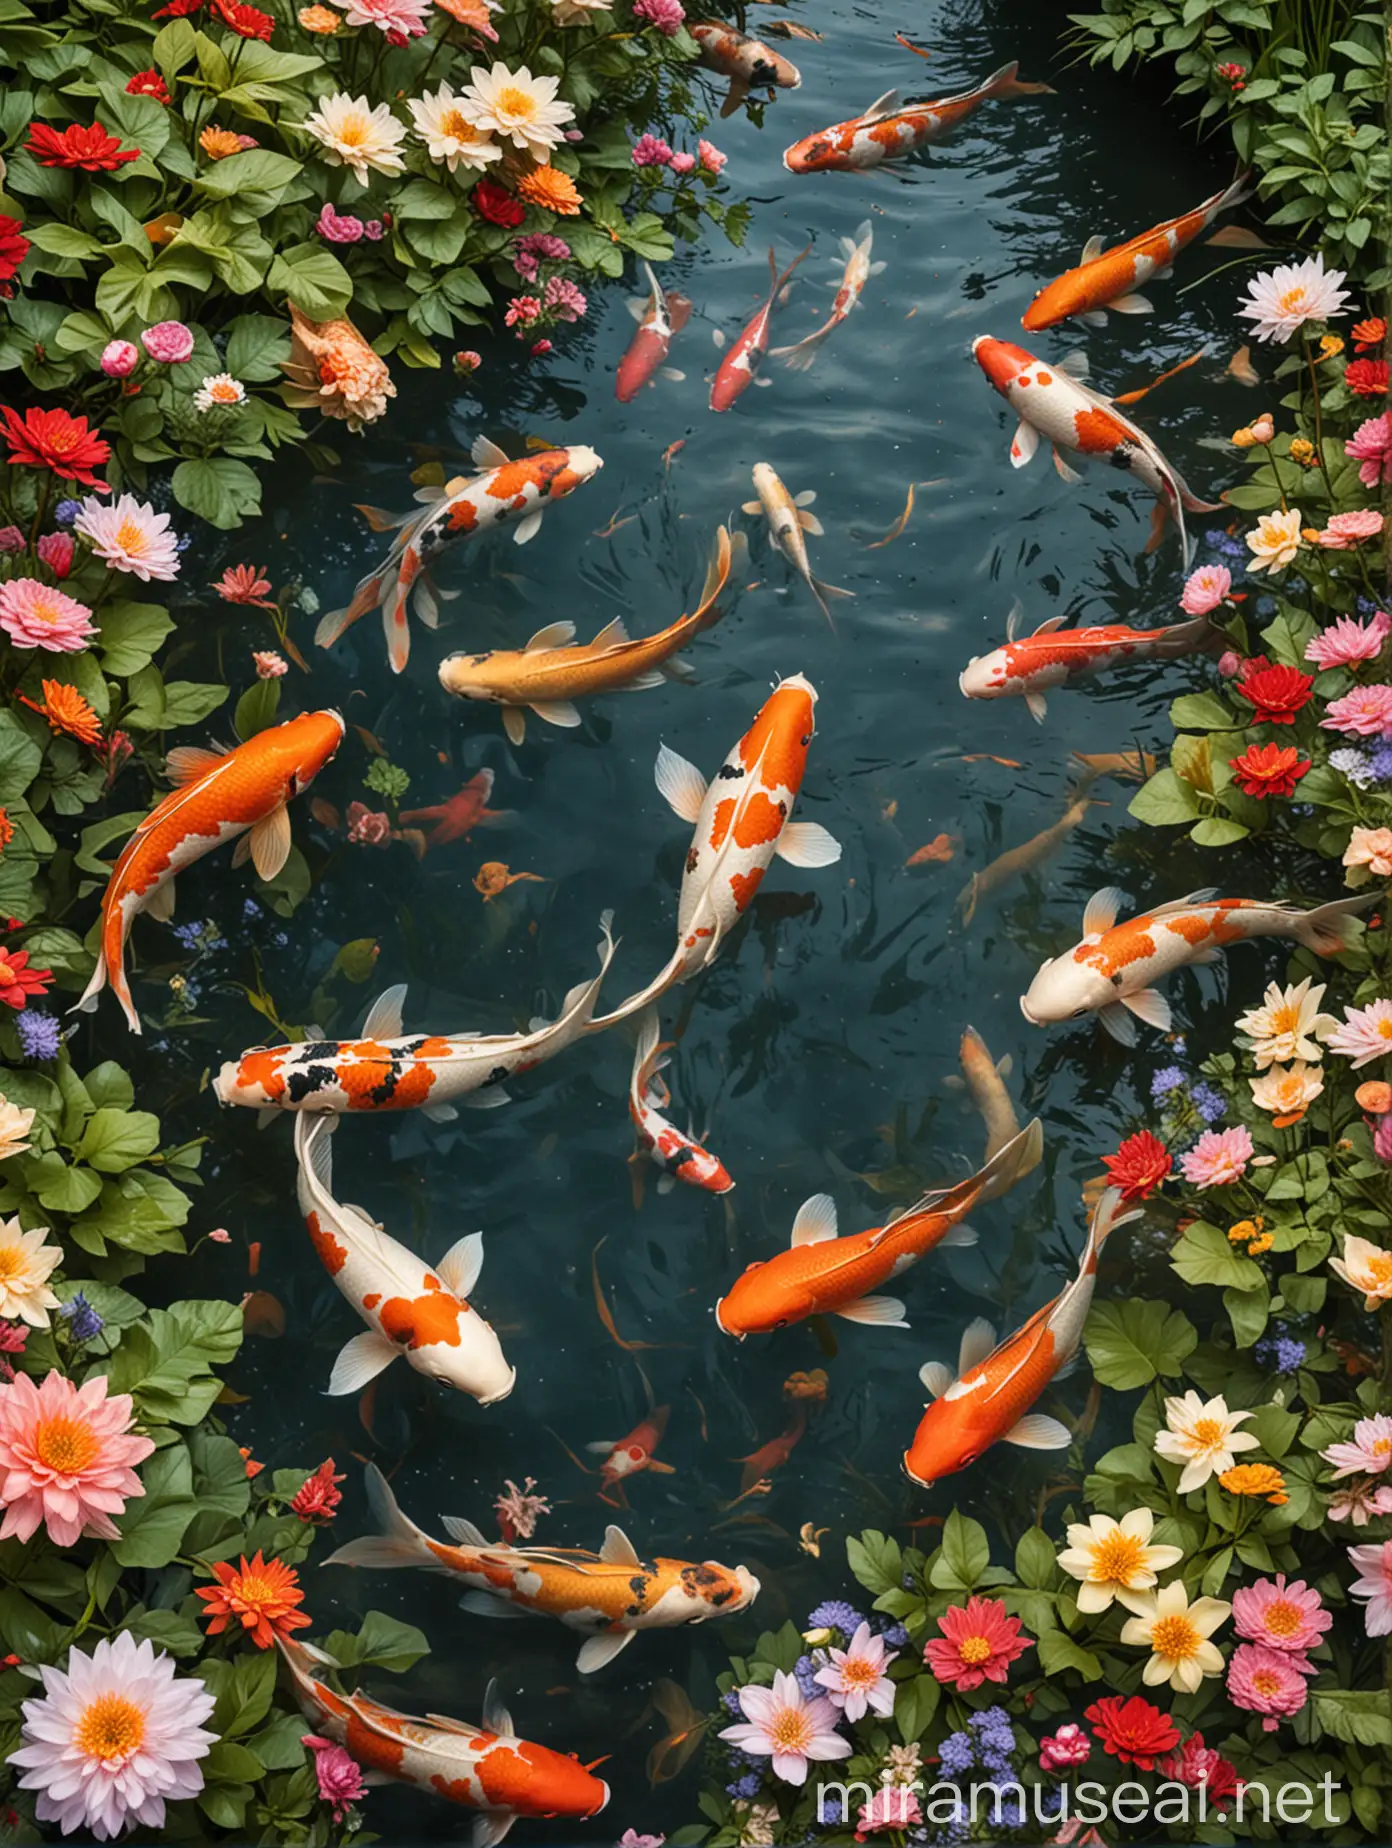 Koi fish swimming among flowers